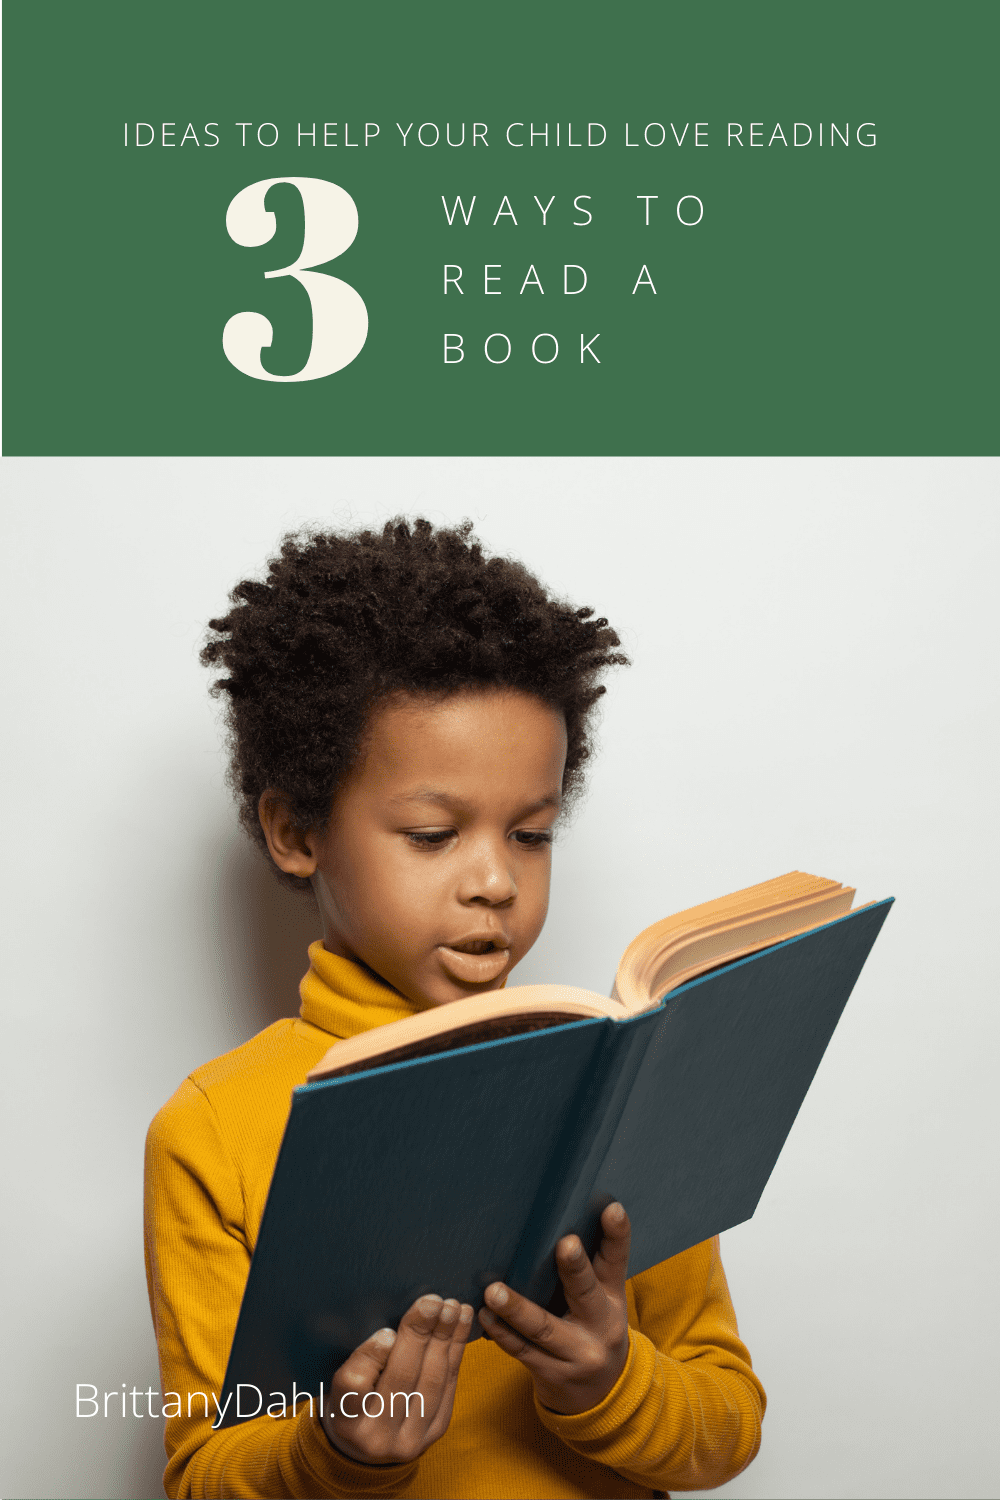 3 Ways to Read a Book: Build Stamina